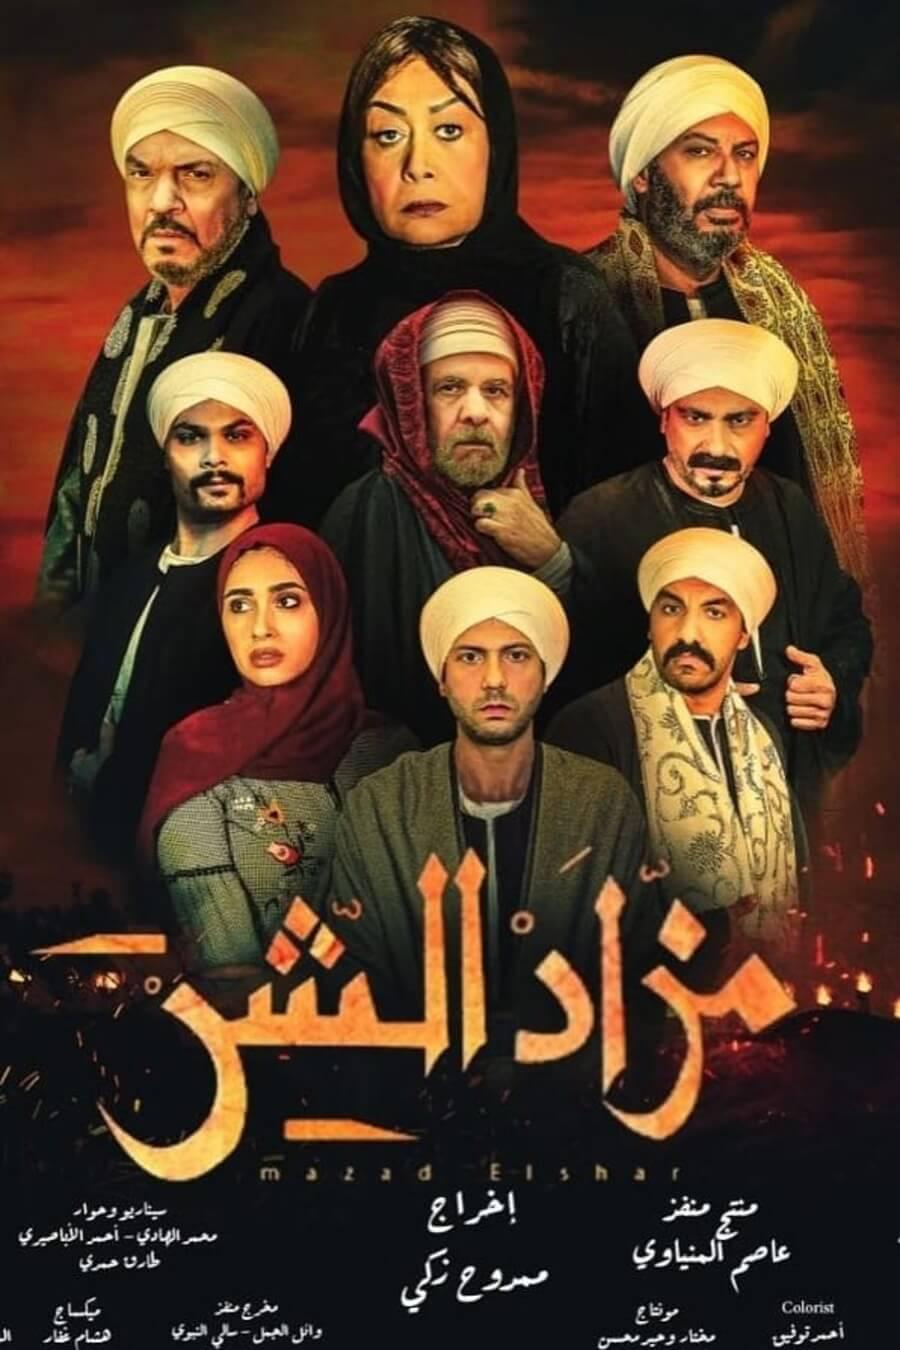 TV ratings for Mazad El Shar (مزاد الشر) in Ireland. TOD TV series